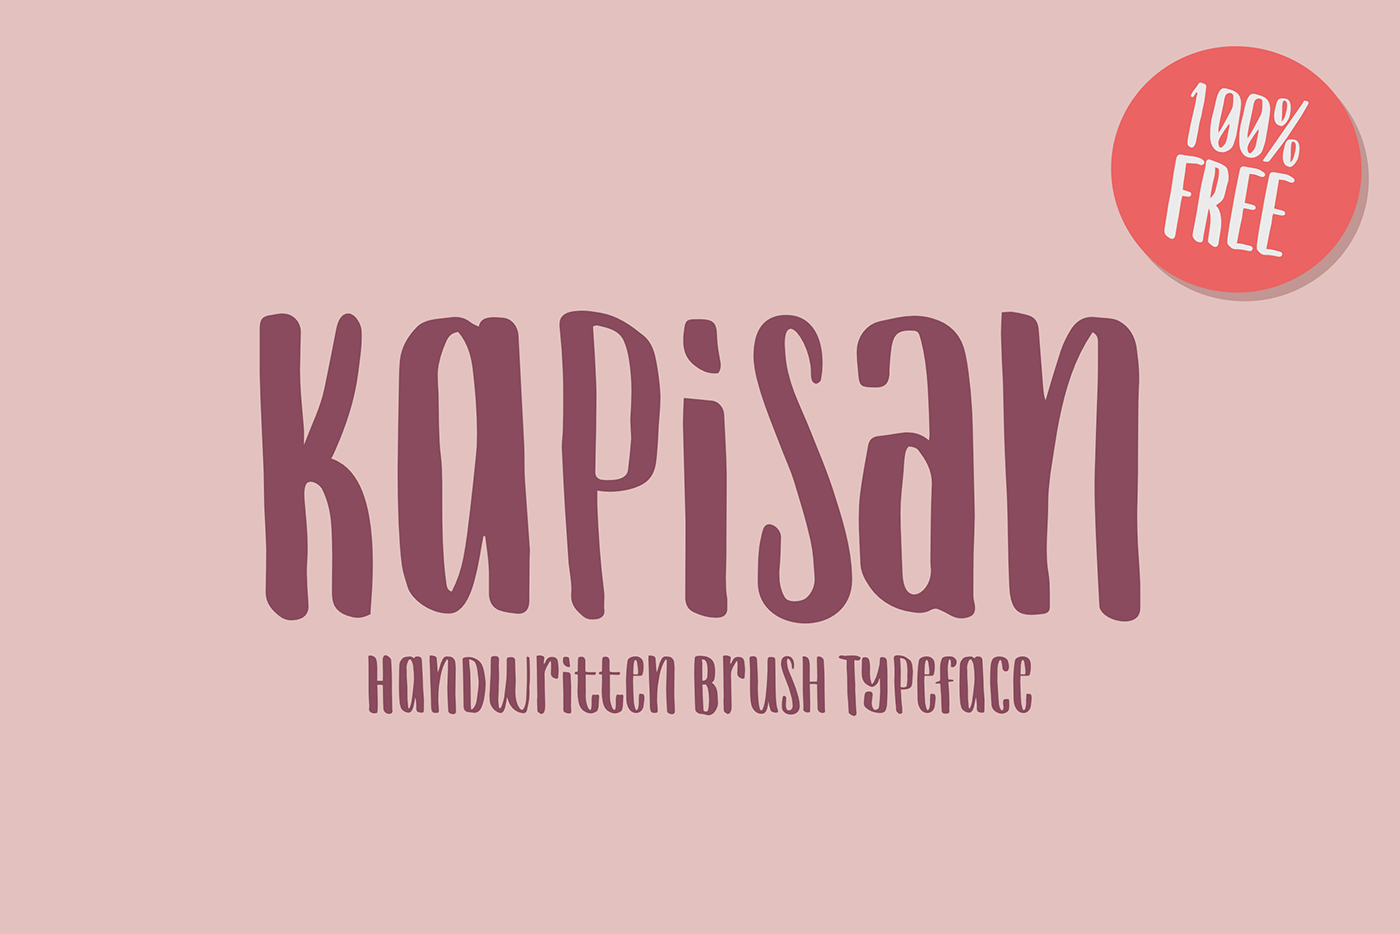 Kapisan – Handwritten Typeface for FREE